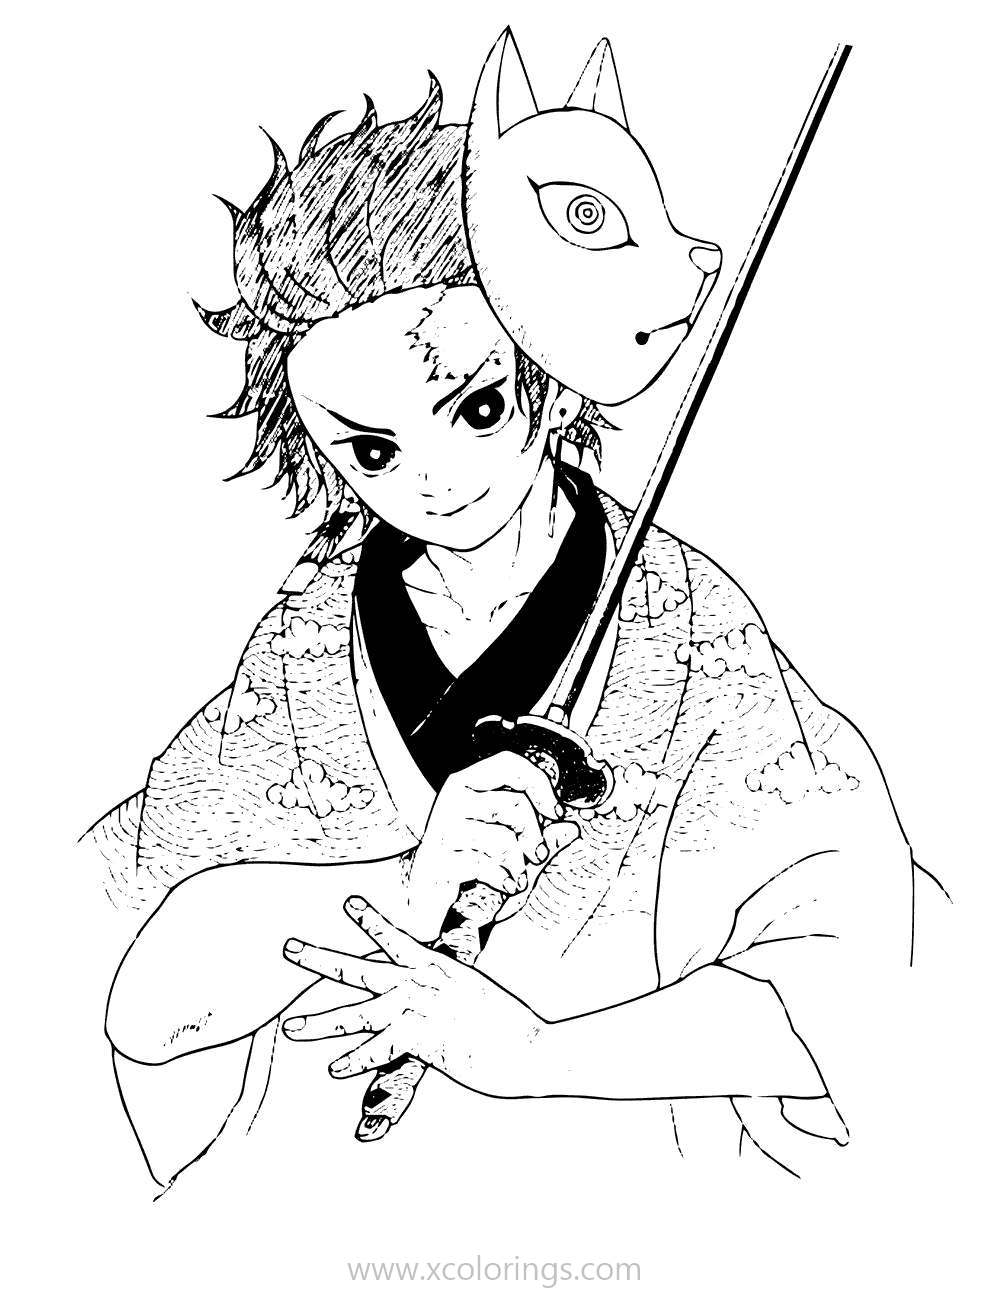 Free Demon Slayer Coloring Pages Tanjiro Kamado With Sword and Mask printable